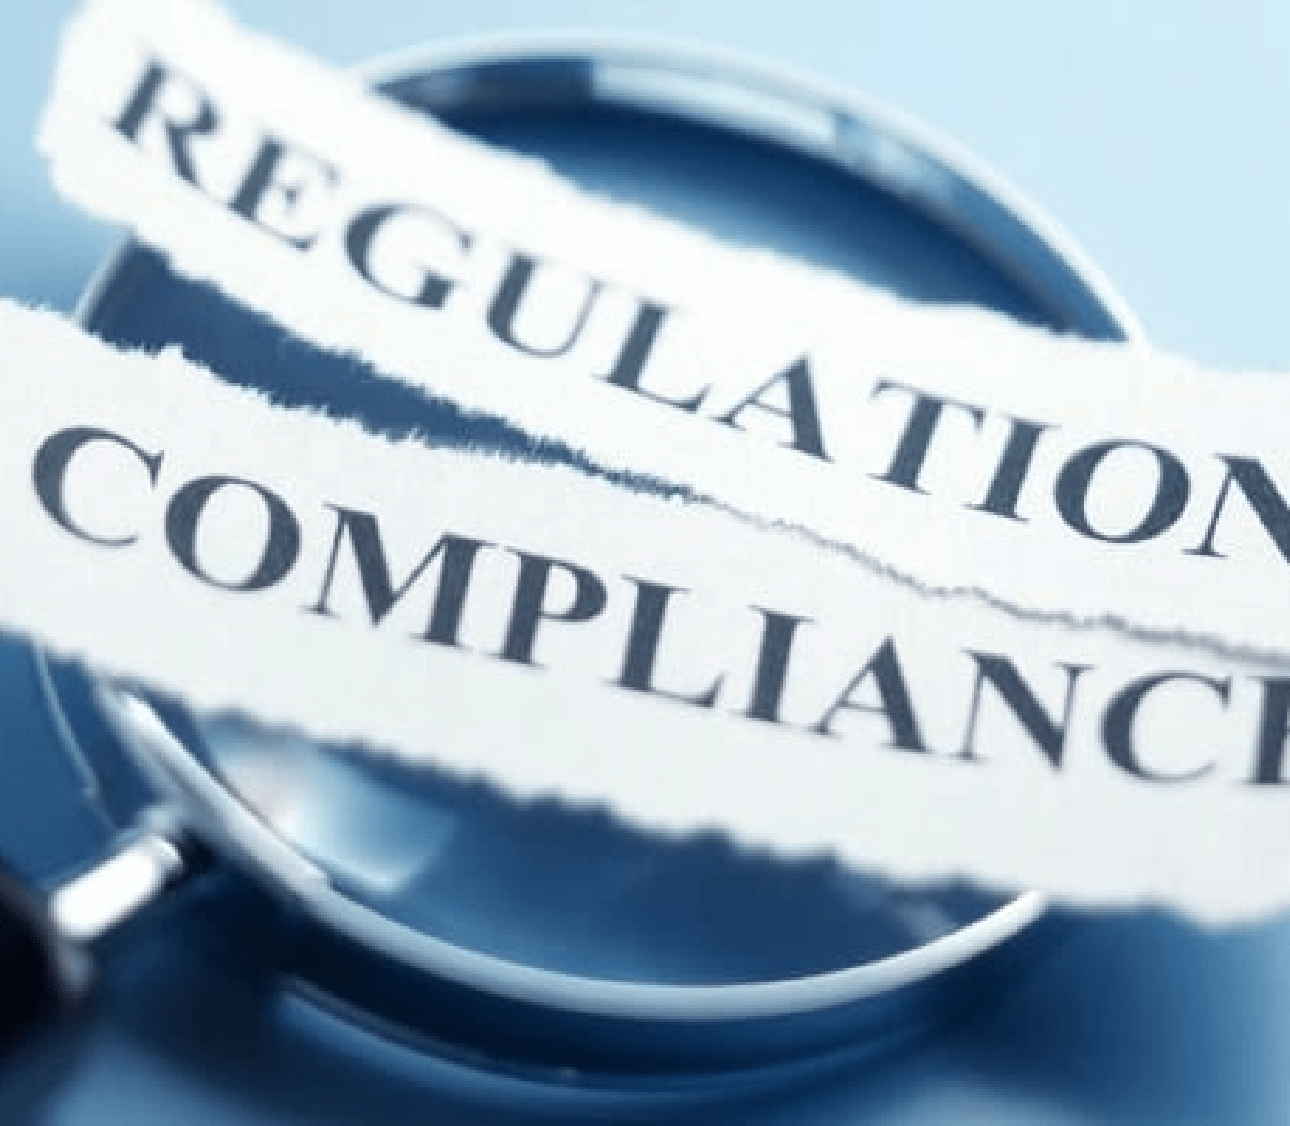 Regulatory Compliance IT security